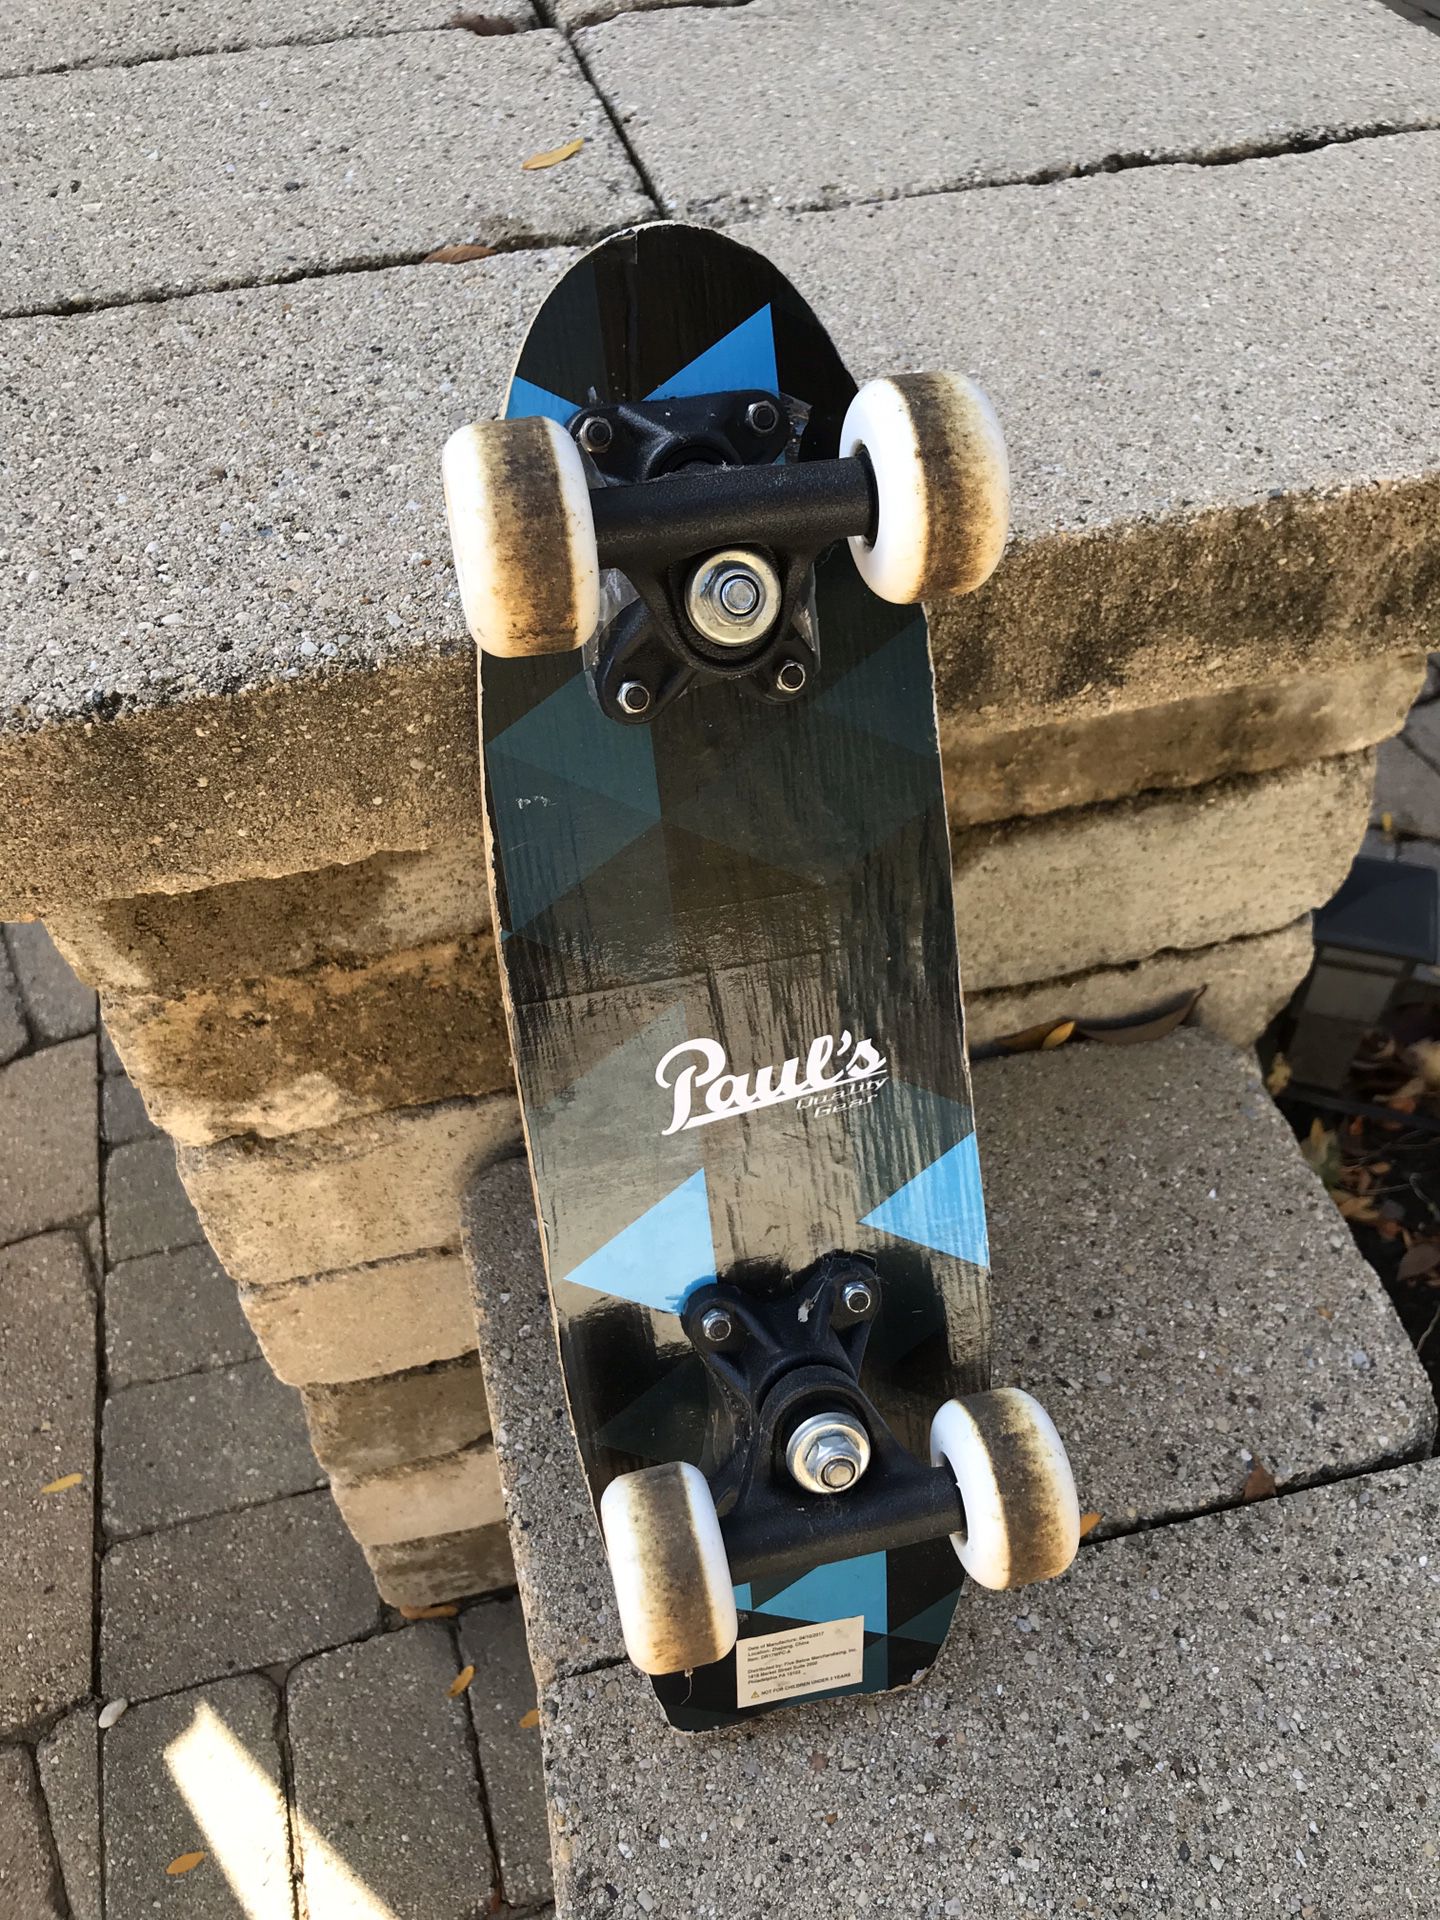 Paul’s Mini Skateboard Penny Banana Board Good Condition 17”